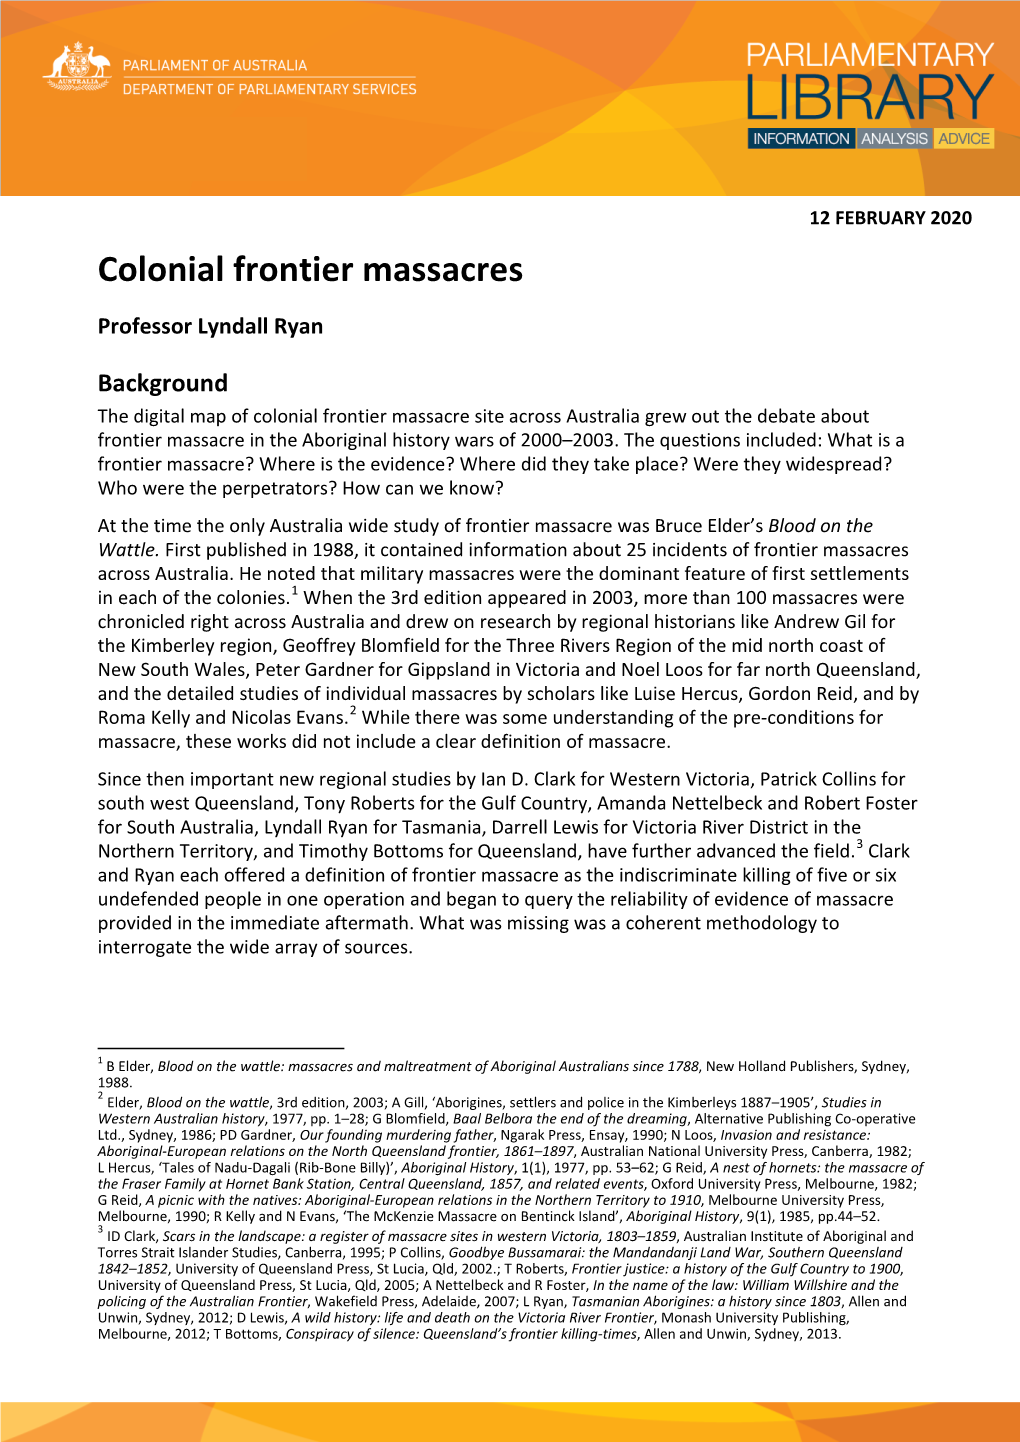 Colonial Frontier Massacres